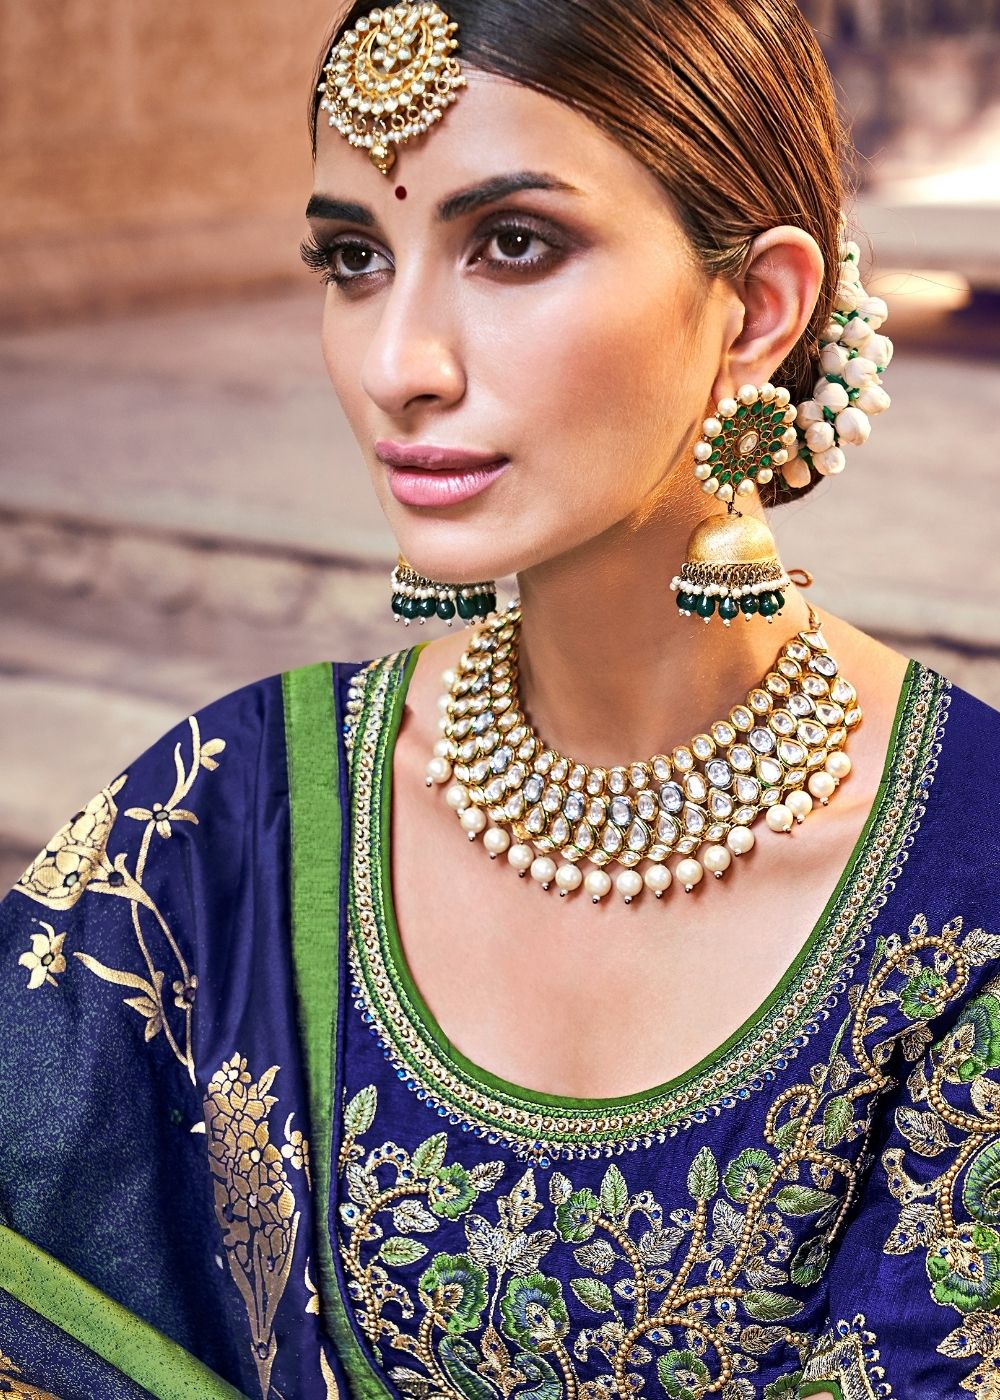 Fern Green & Blue Banarasi Silk Saree with Embroidered Silk Blouse